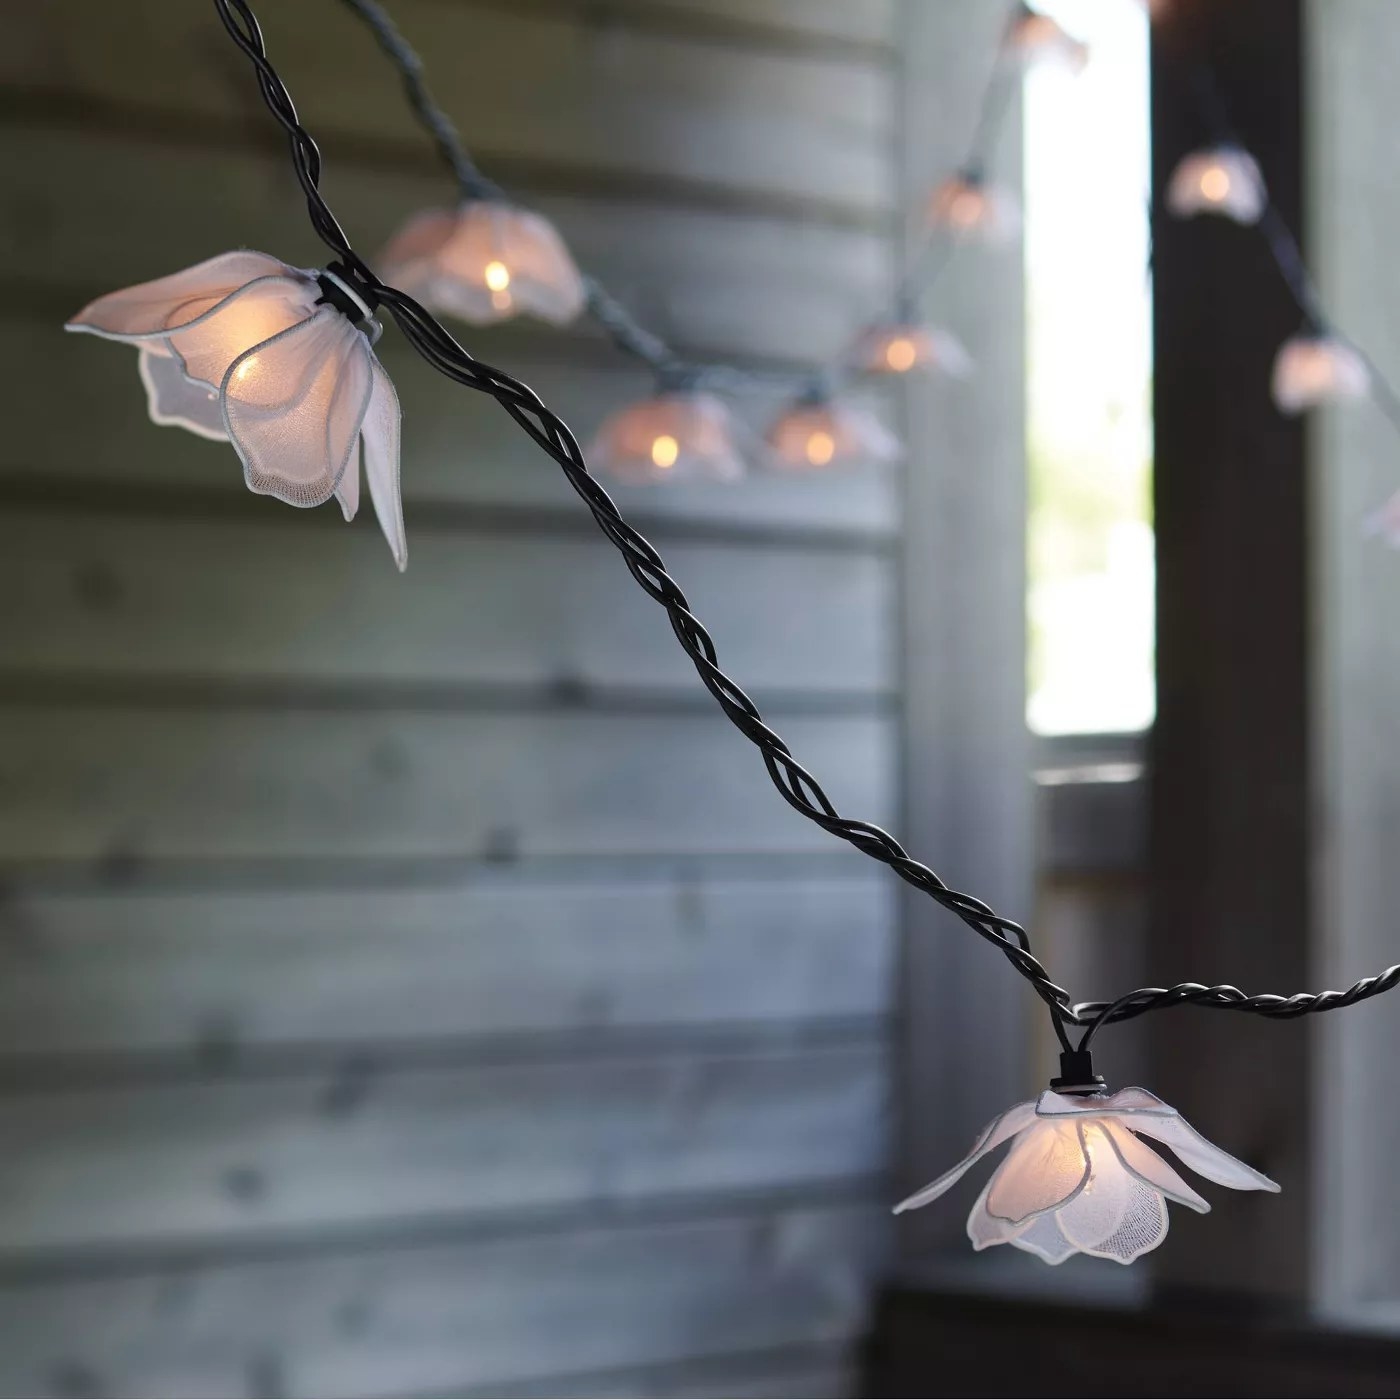 The floral string lights